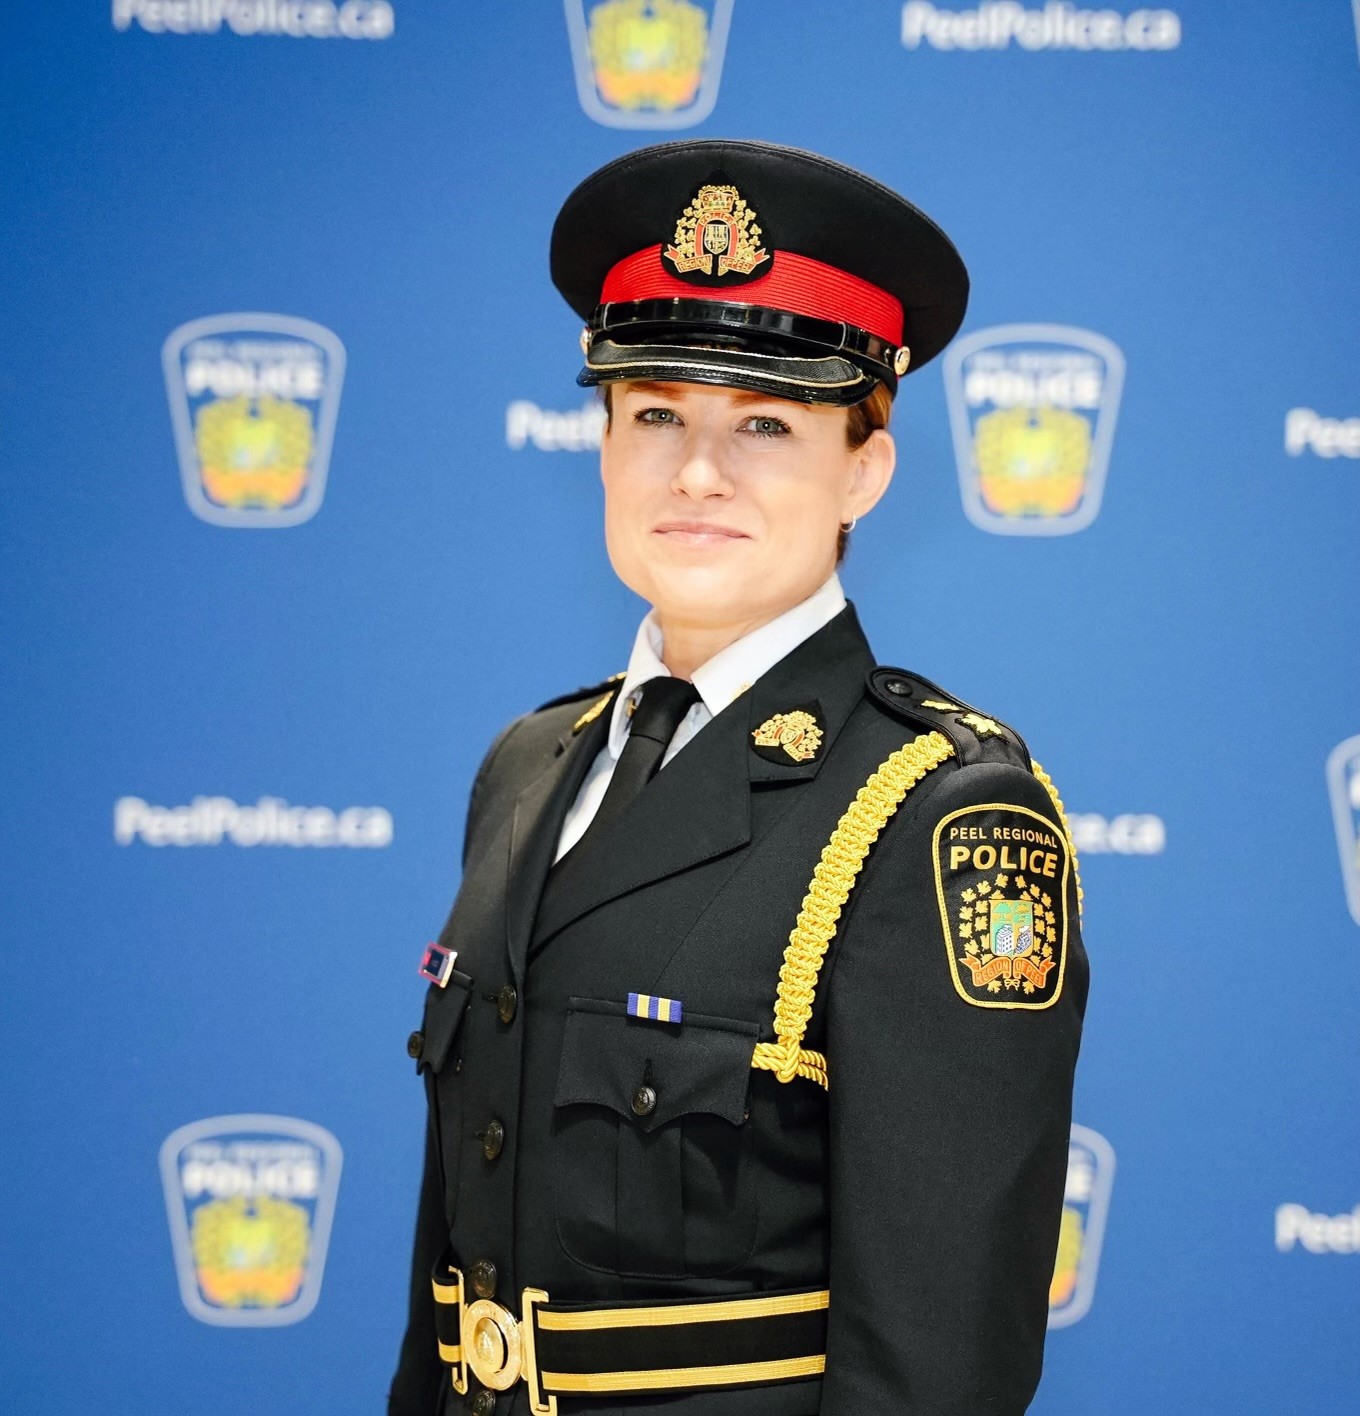 deputy chief of police smiling wearing uniform